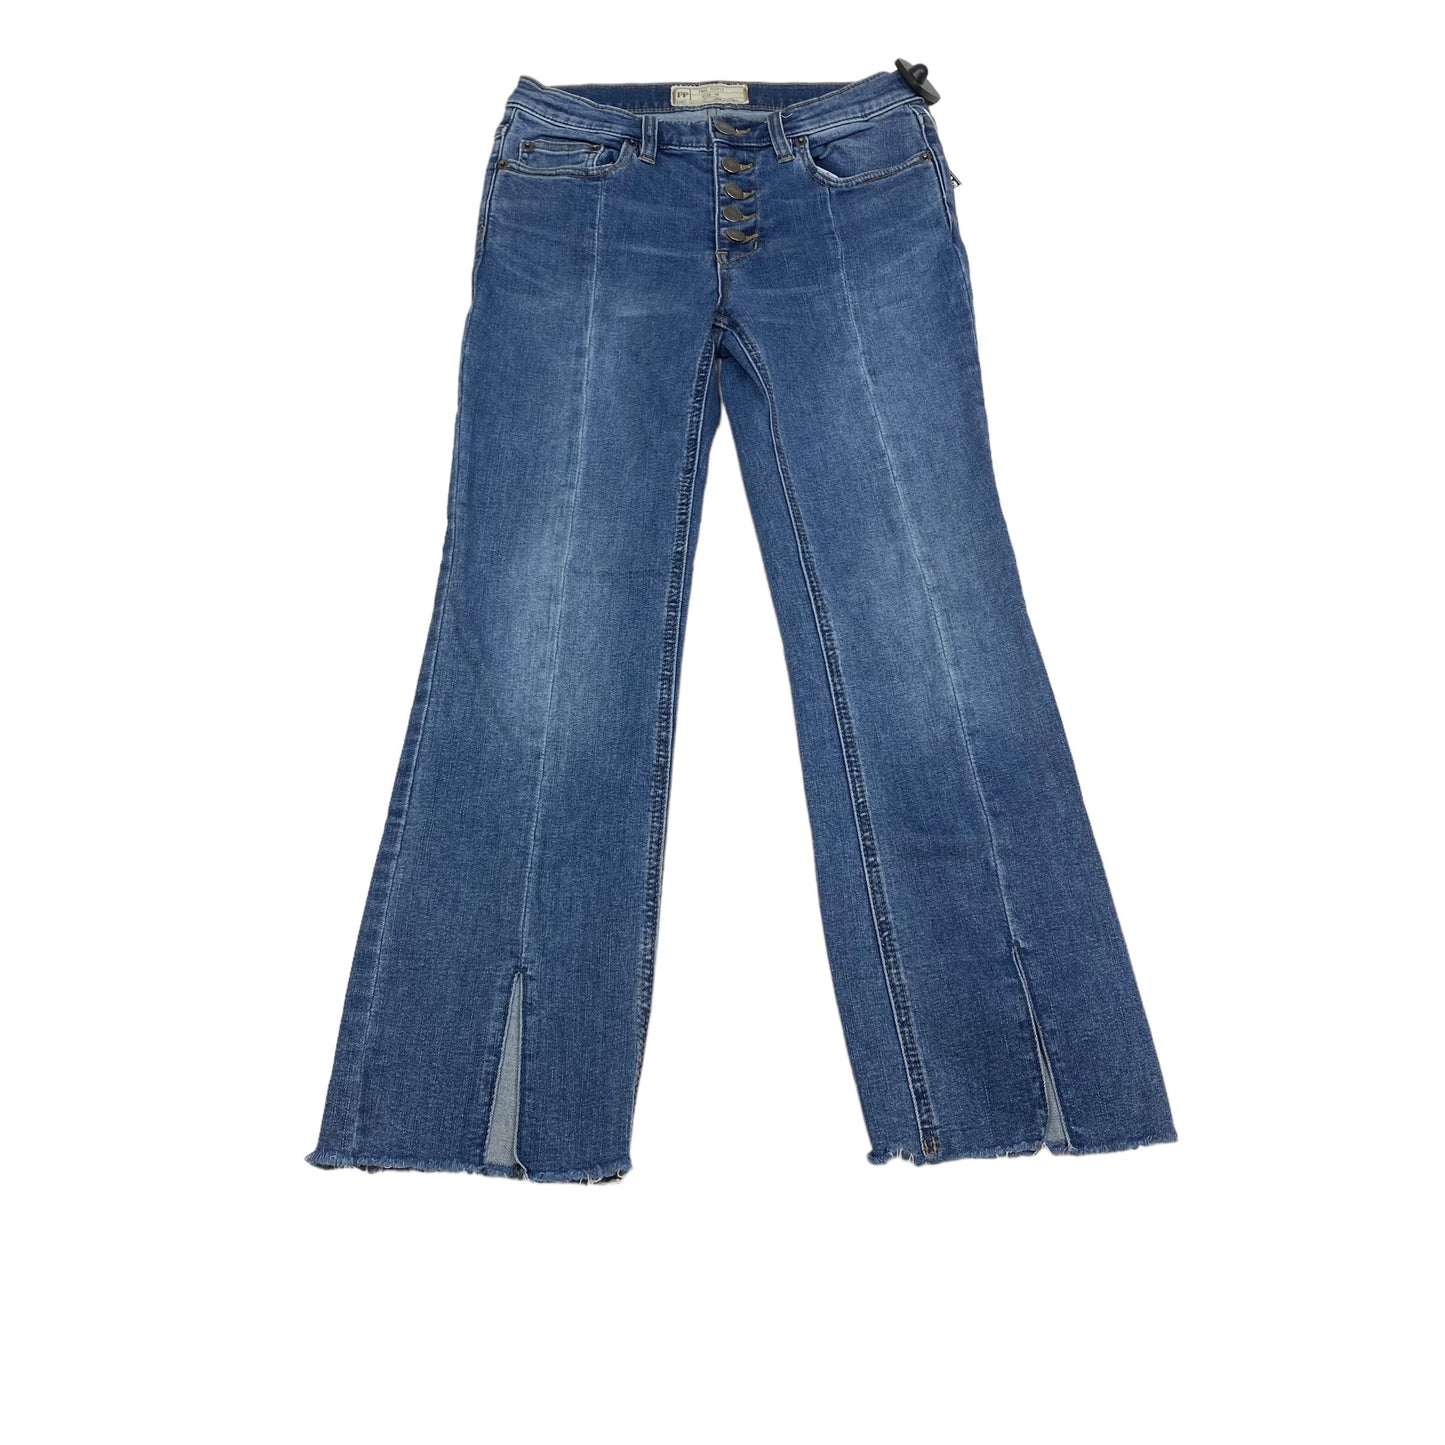 Blue Denim Jeans Cropped Free People, Size 2